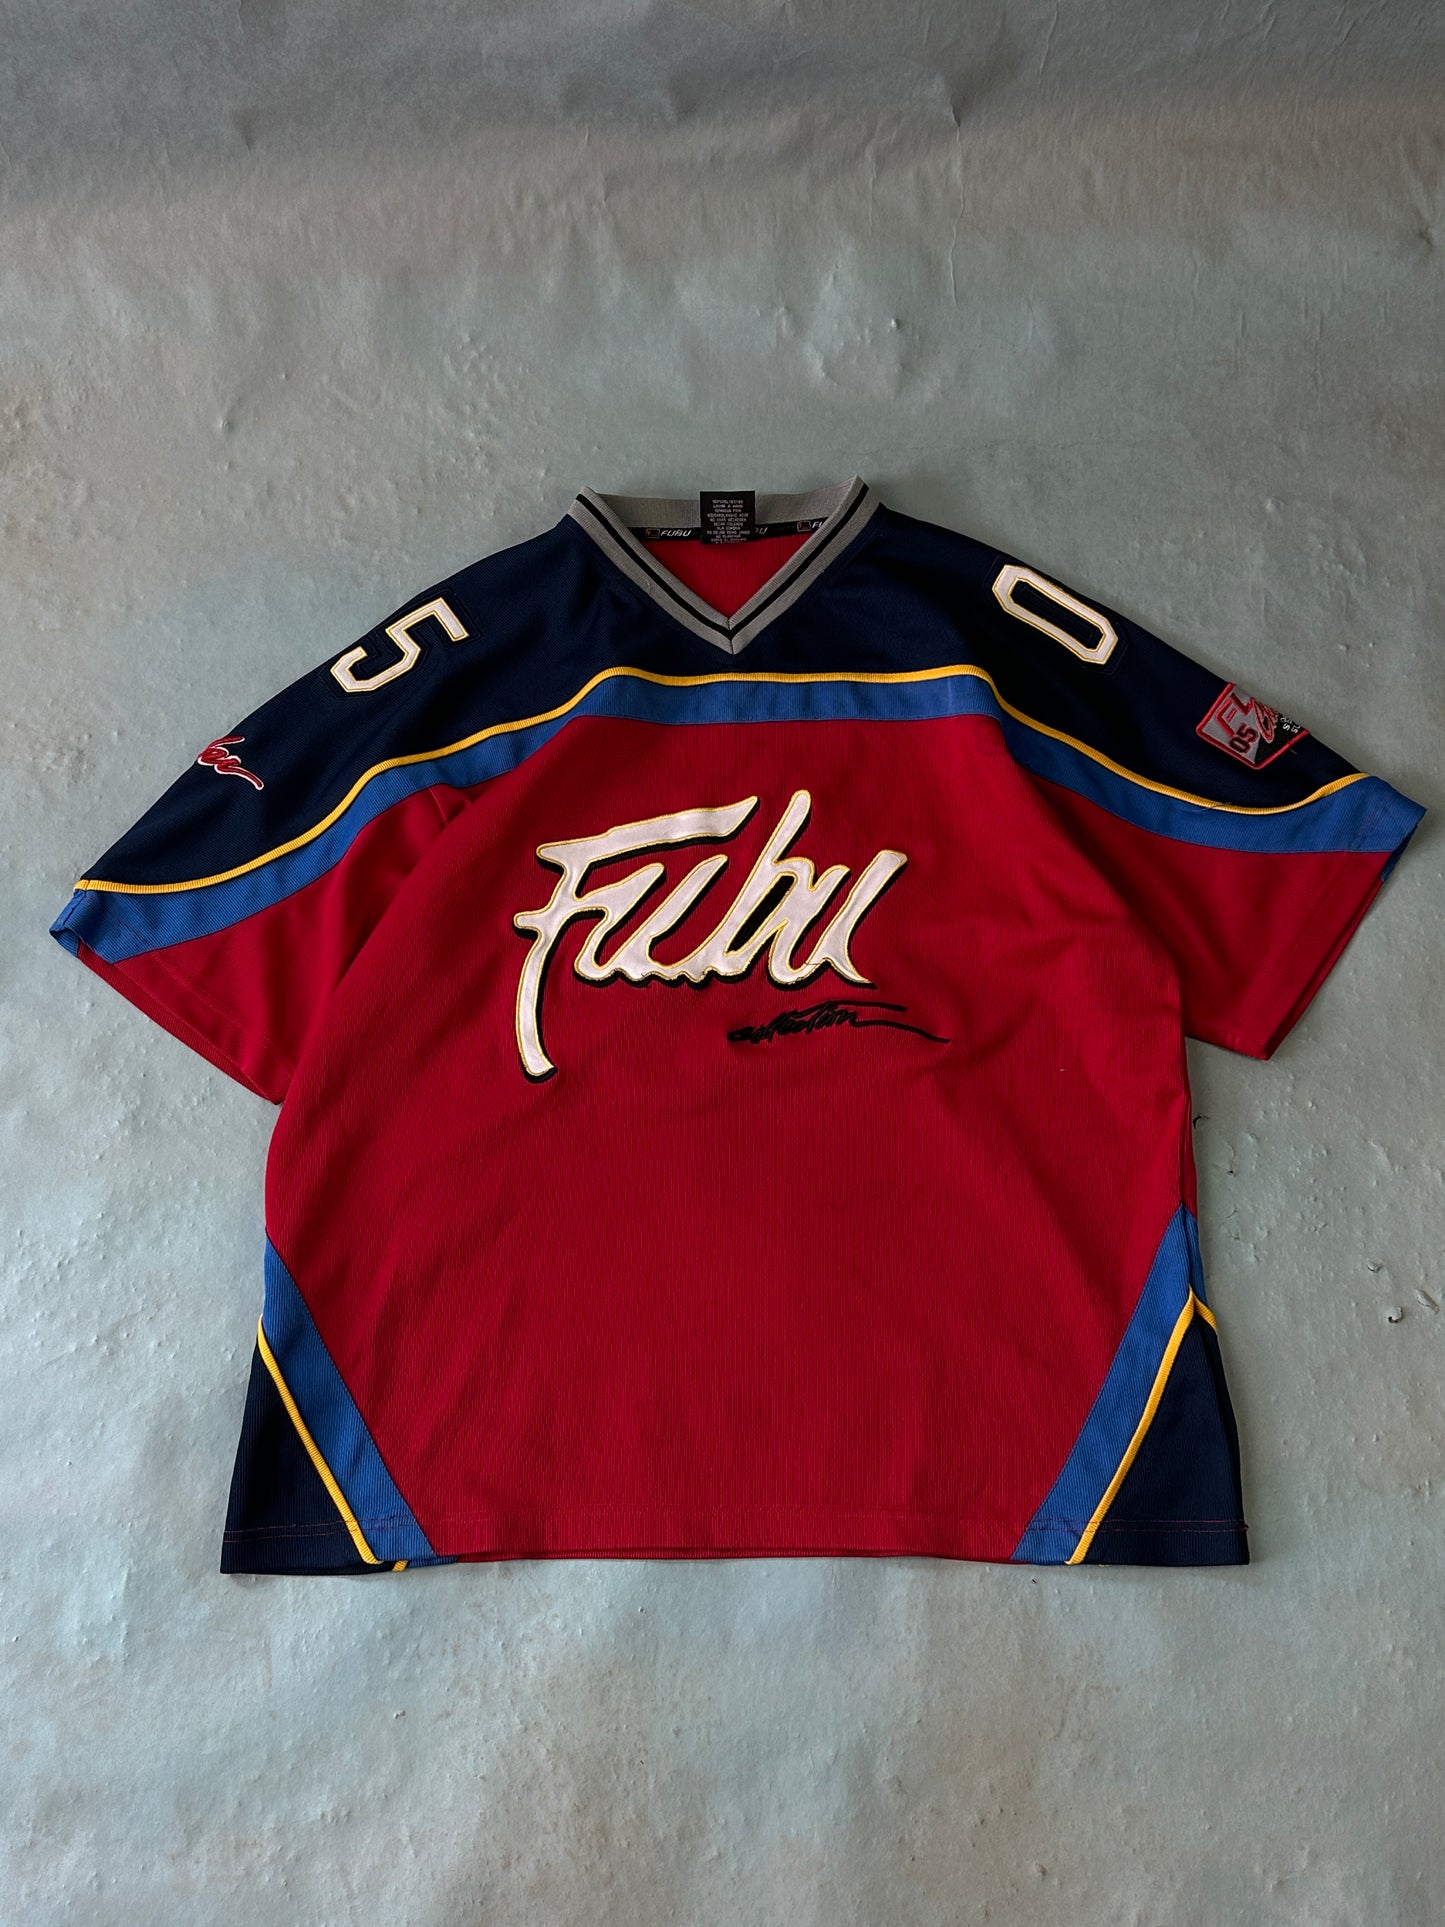 Fubu Vintage Jersey - M